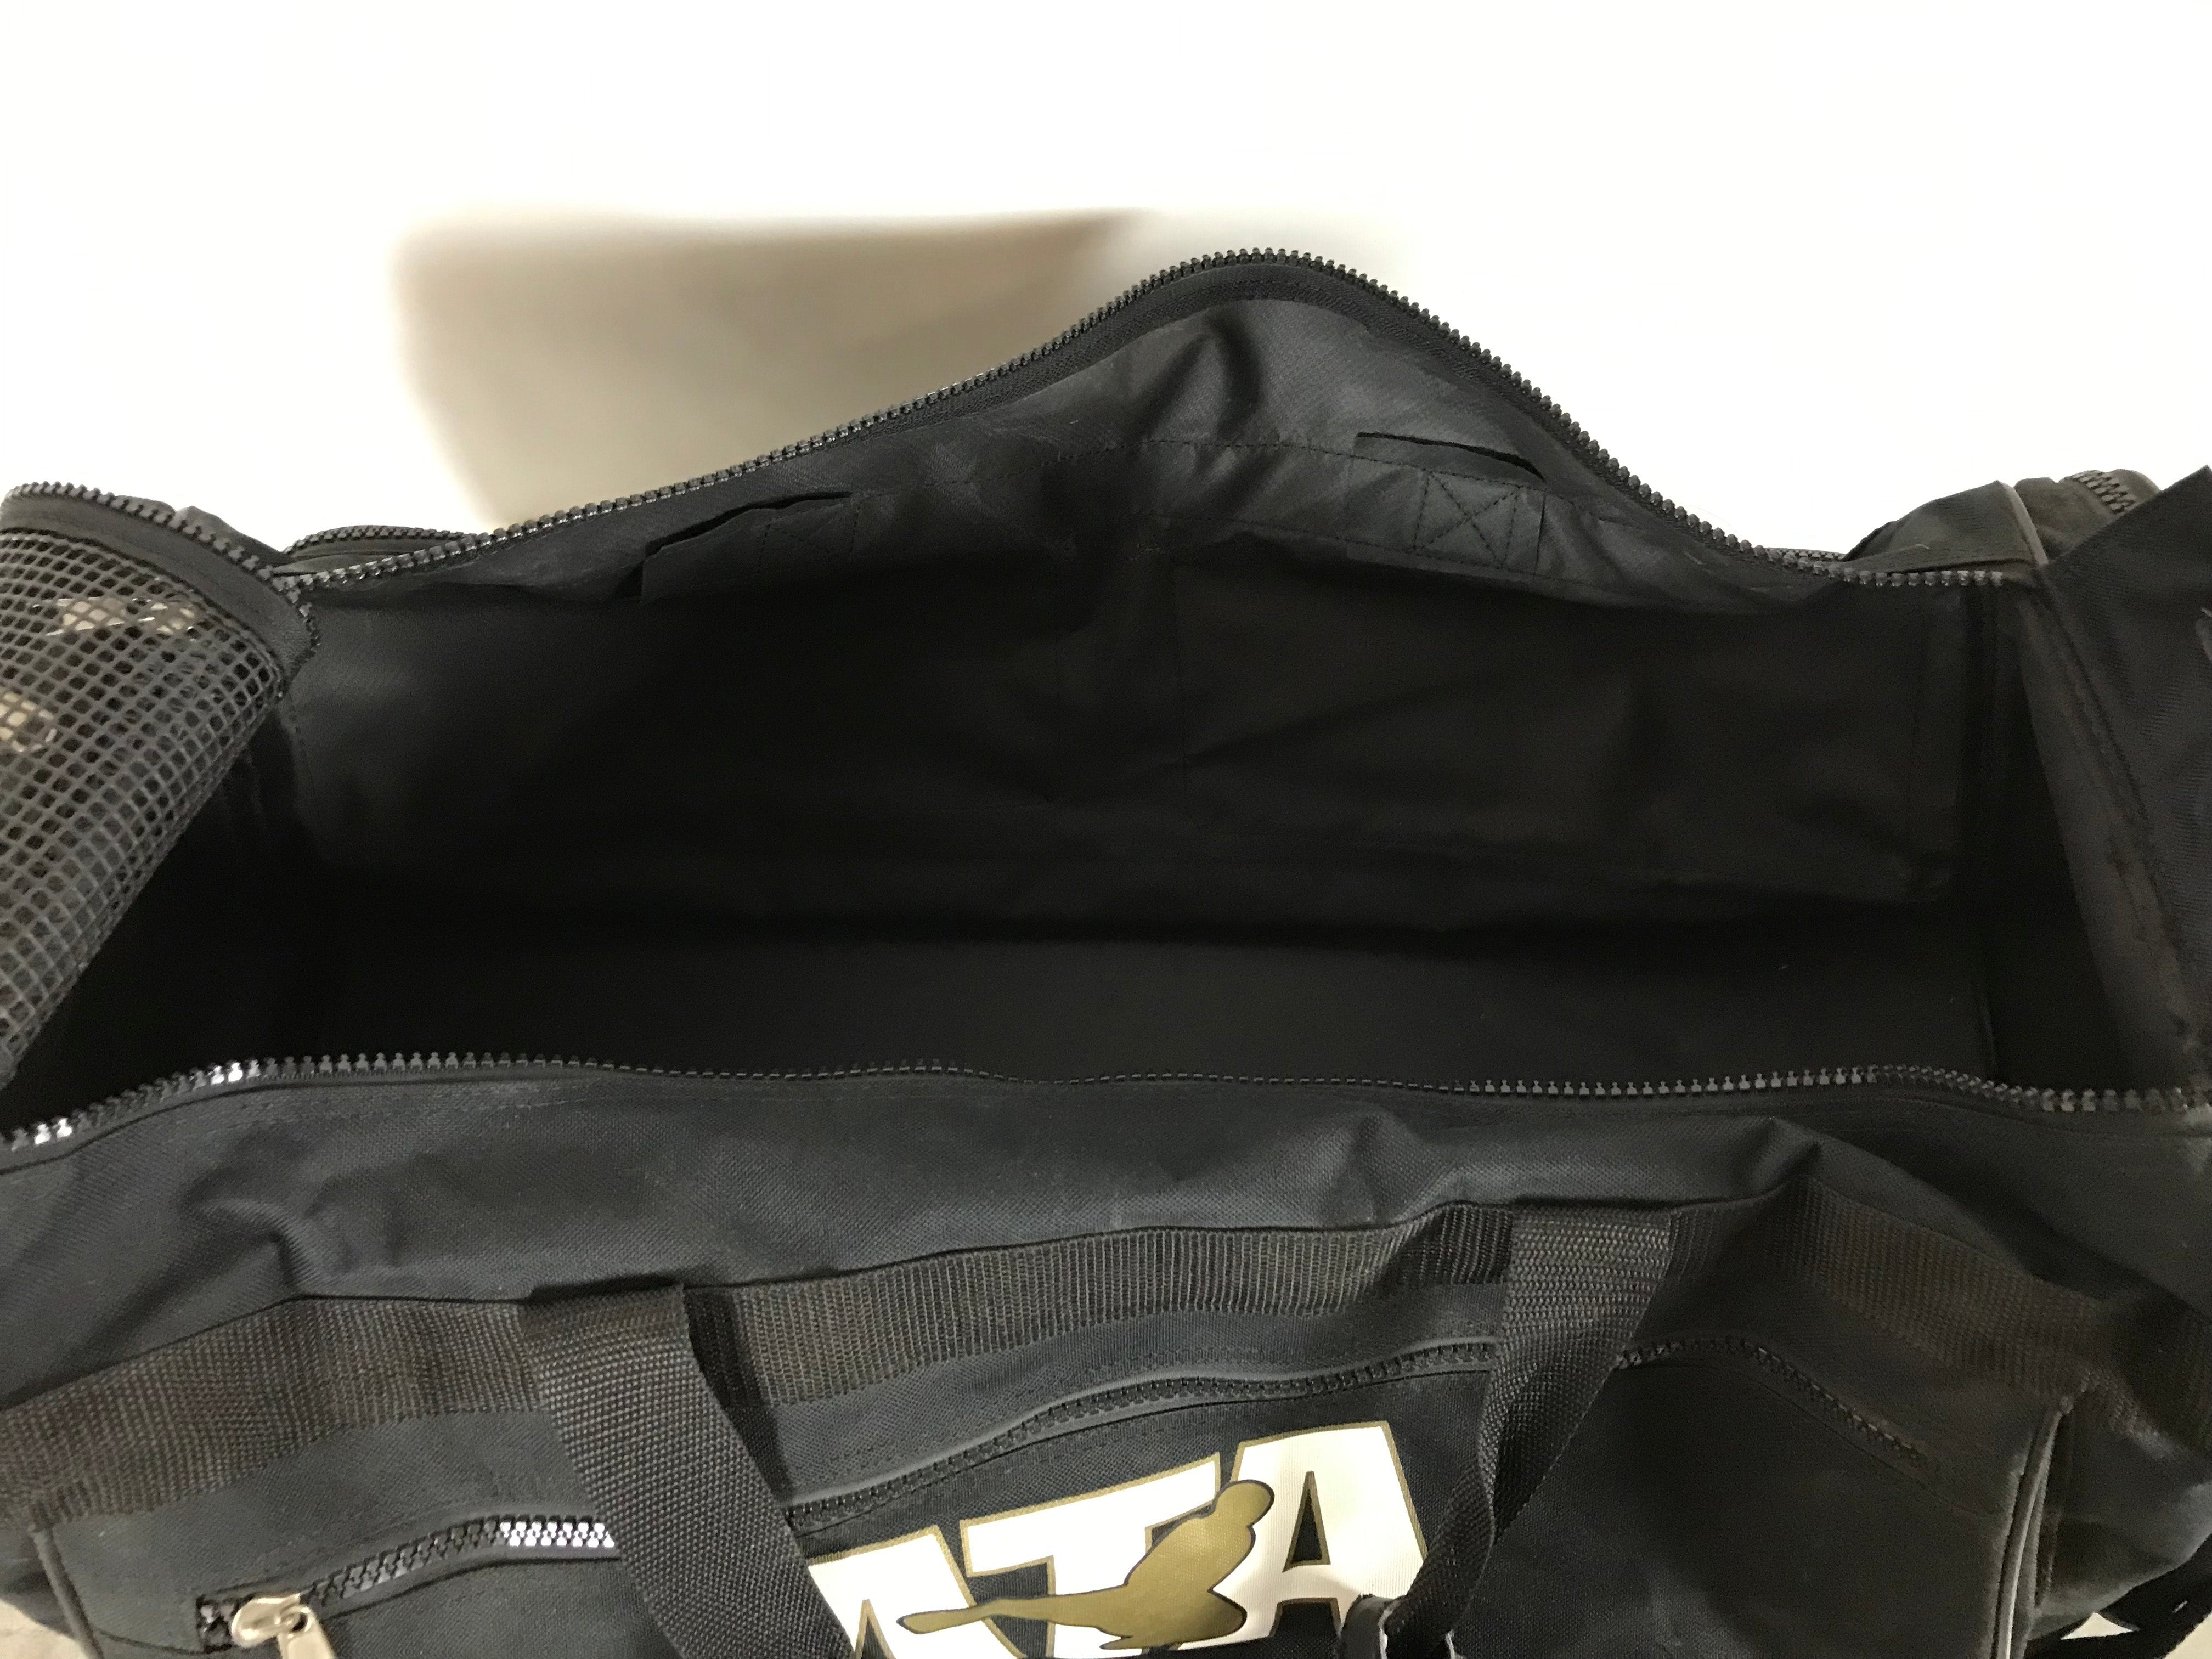 ATA Taekwondo Martial Arts Duffle Bag with Equipment and Practice Accessories